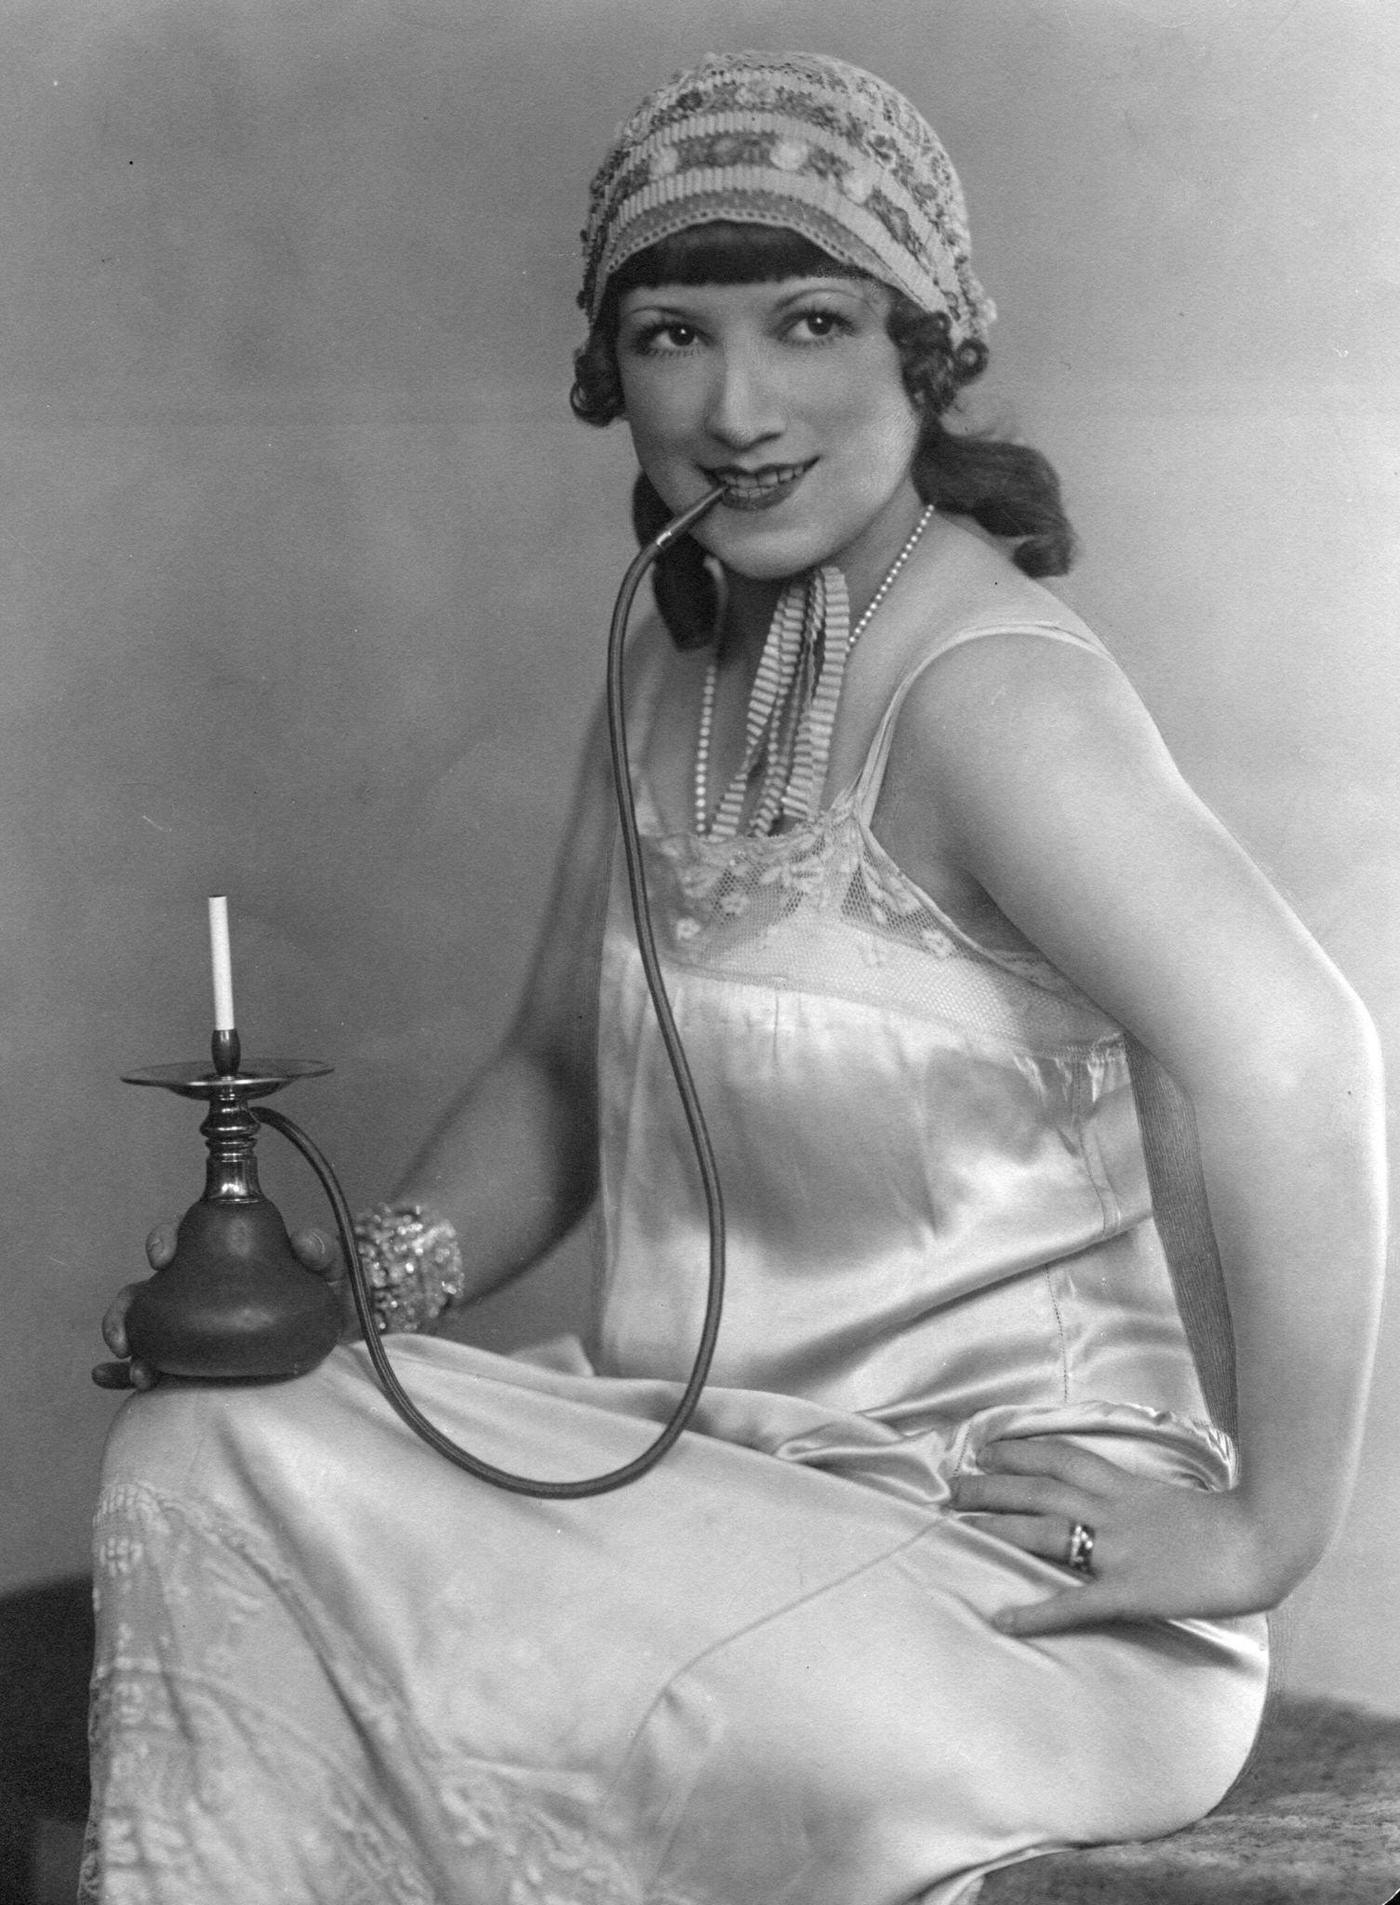 Night Smoke, 1925: A Woman in Nightwear, Smoking a Hookah Pipe